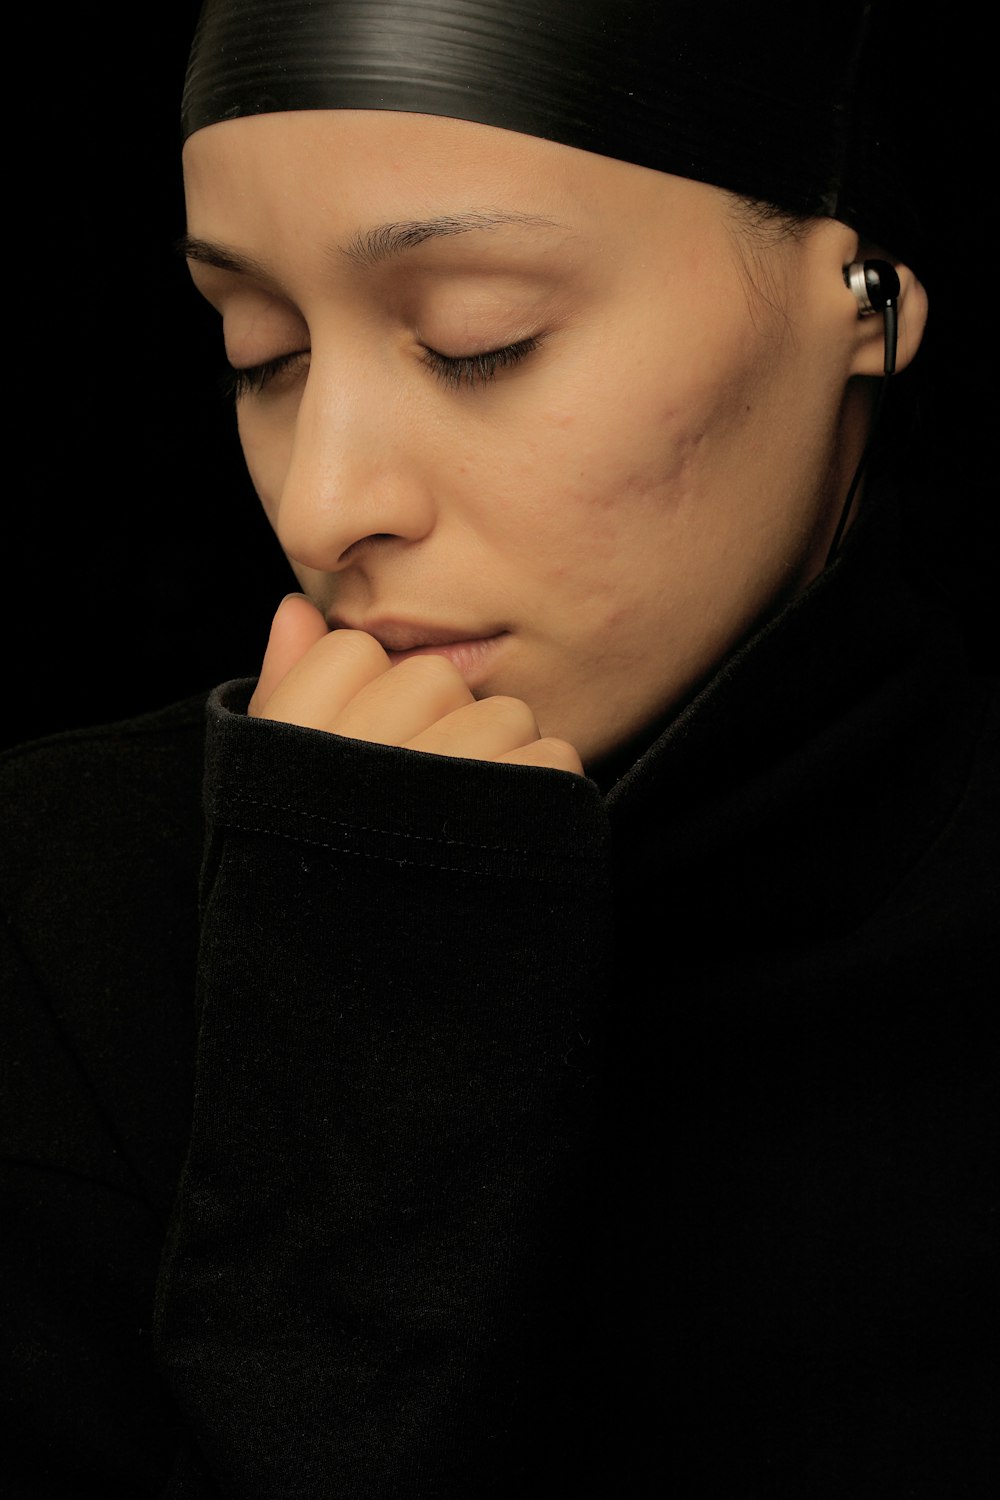 woman in black shirt wearing silver hoop earrings